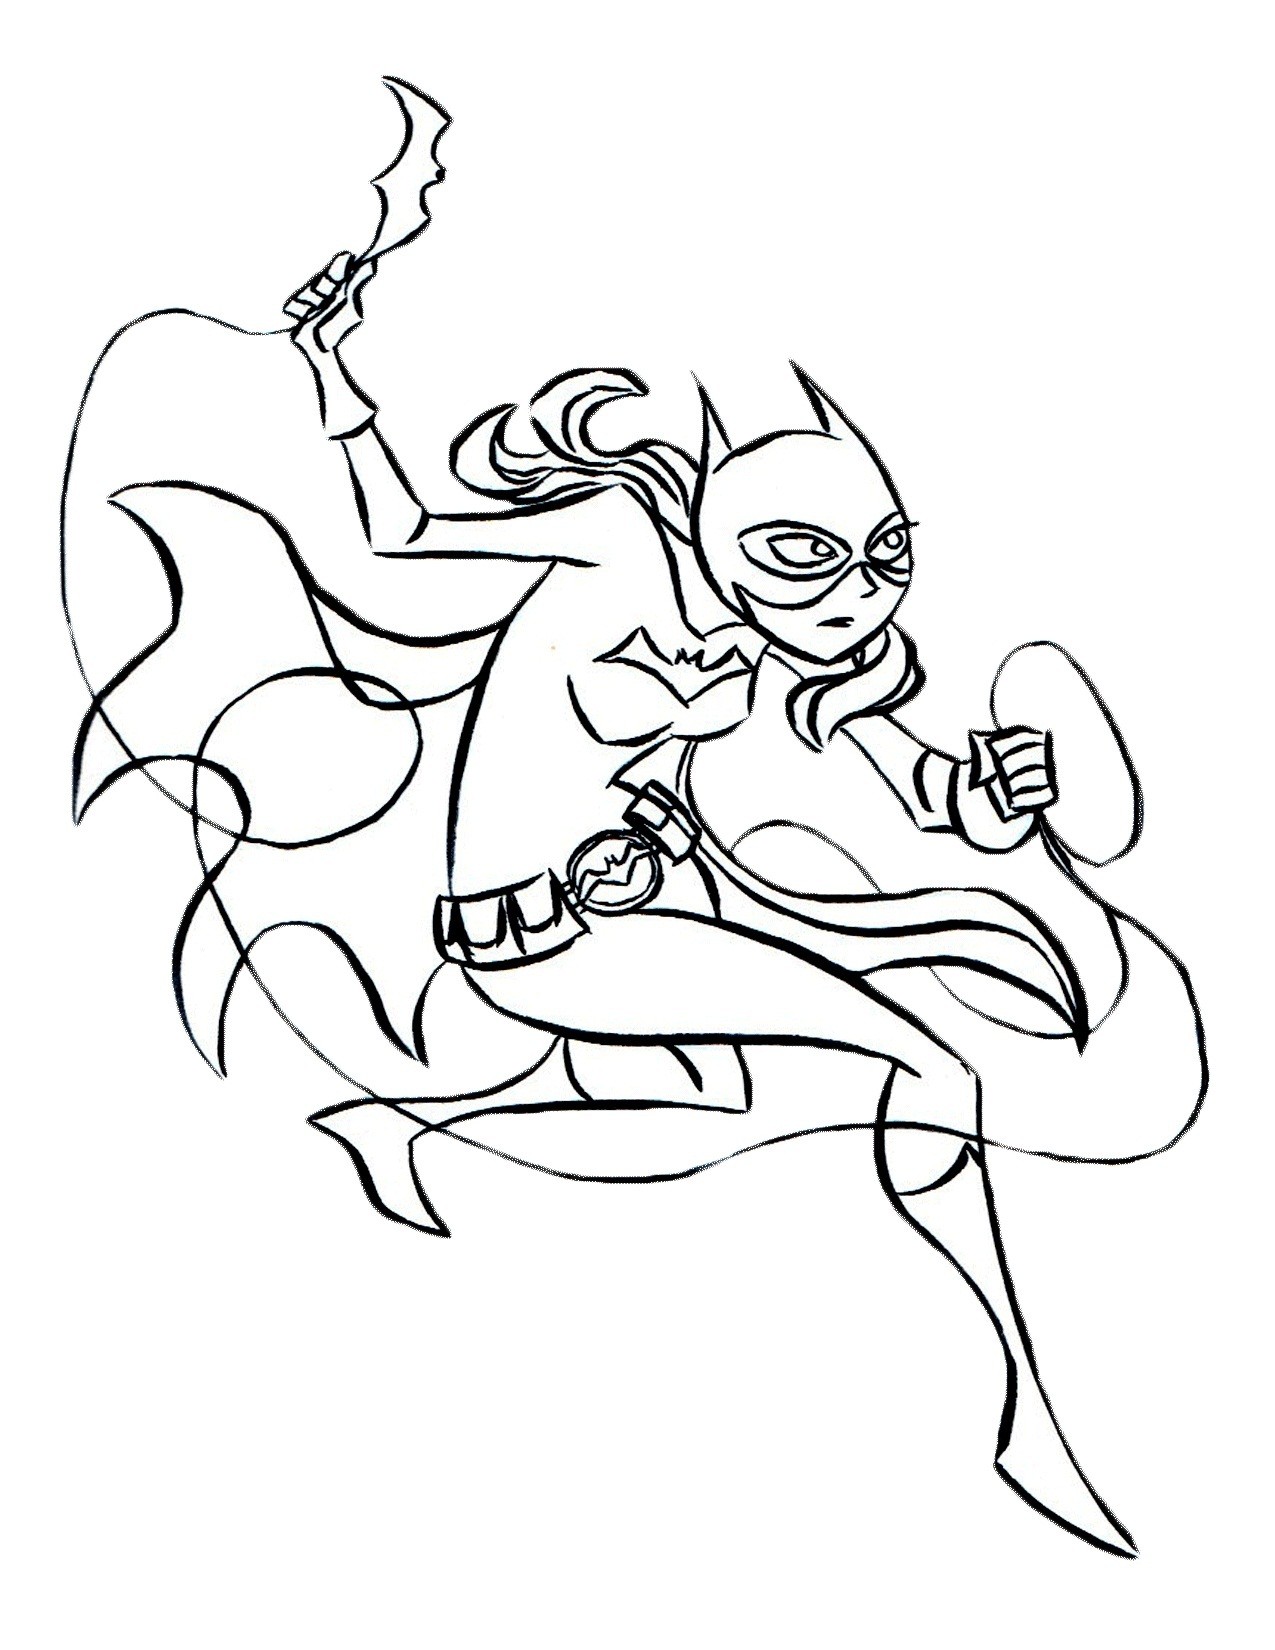 Coloring Pages Batgirl at GetDrawings | Free download